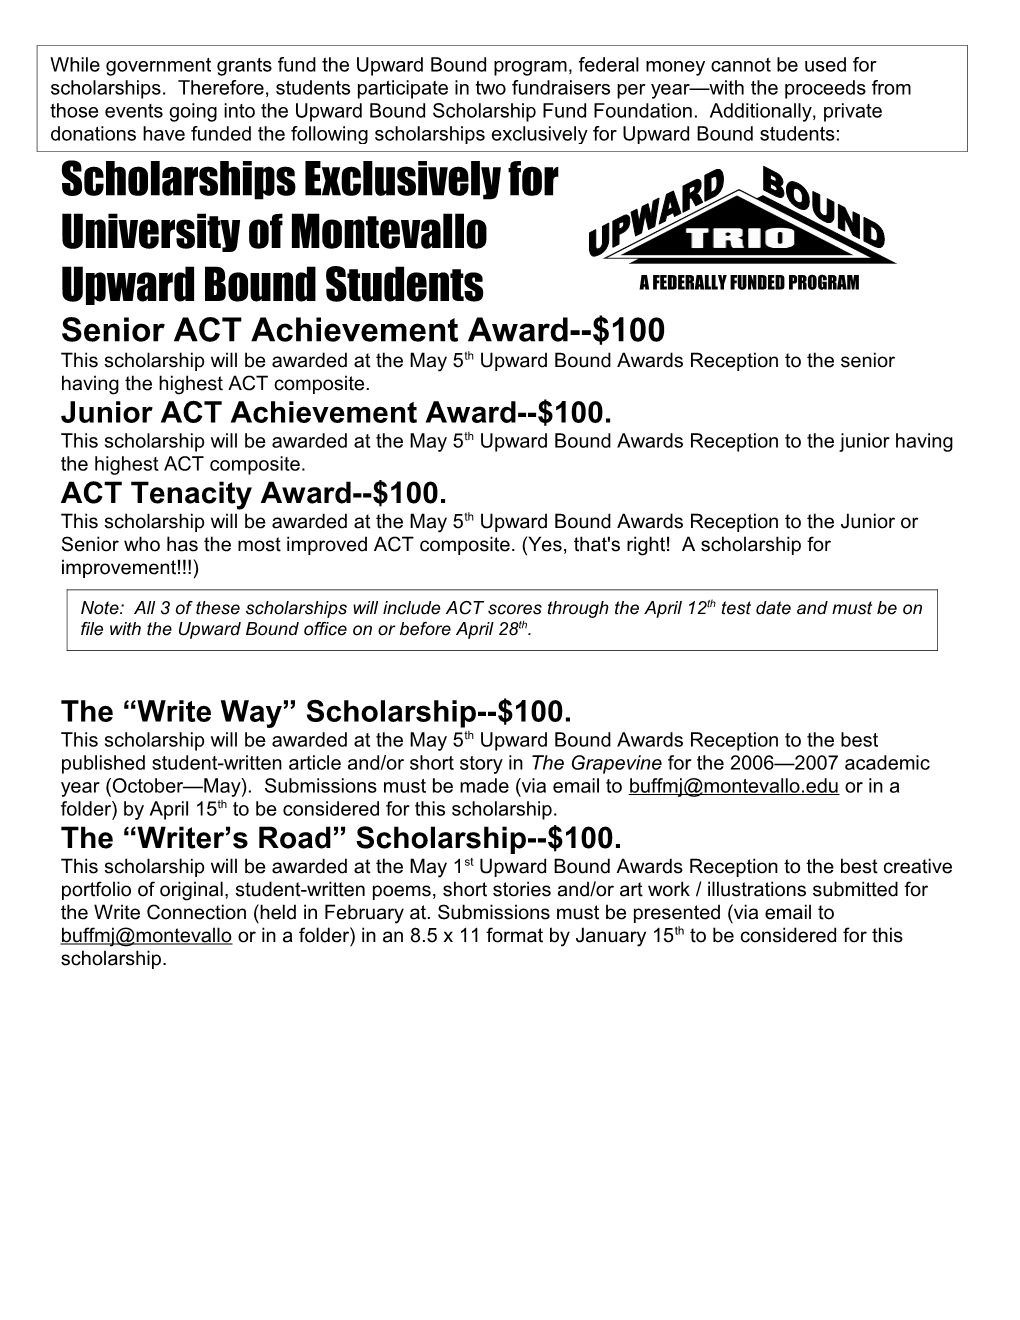 Senior ACT Achievement Award $100